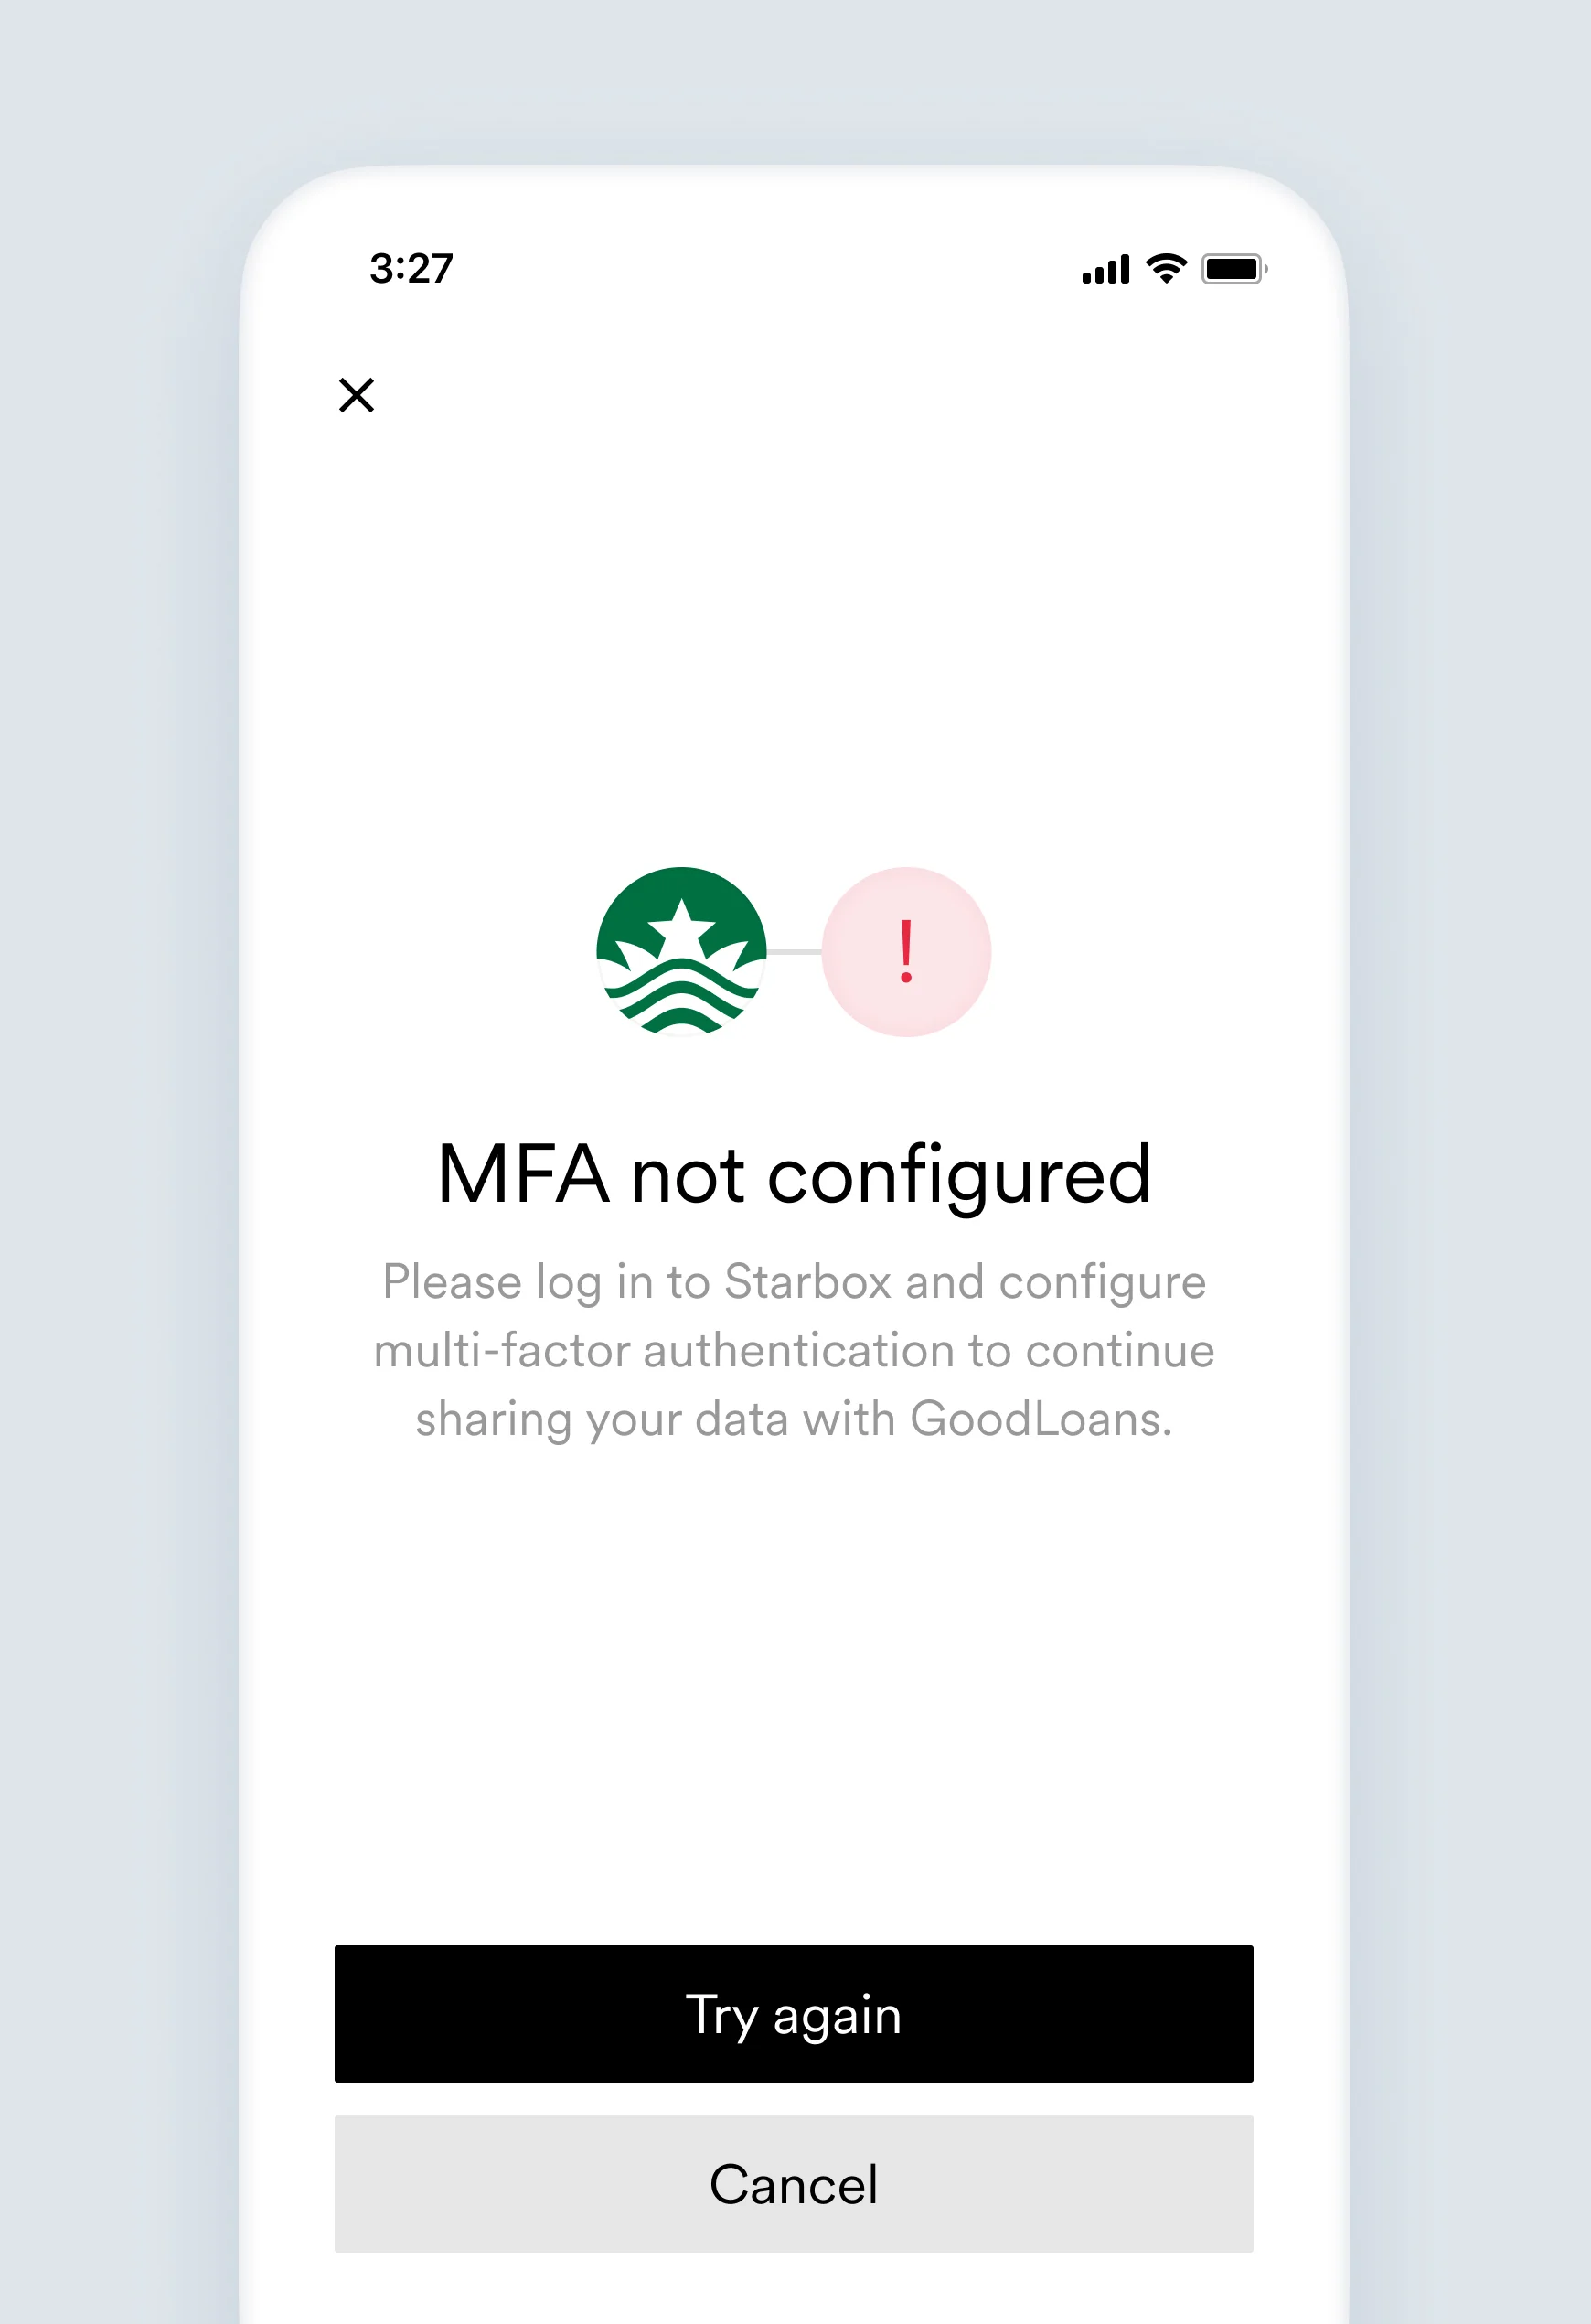 The mfa_not_configured account connection error screen.